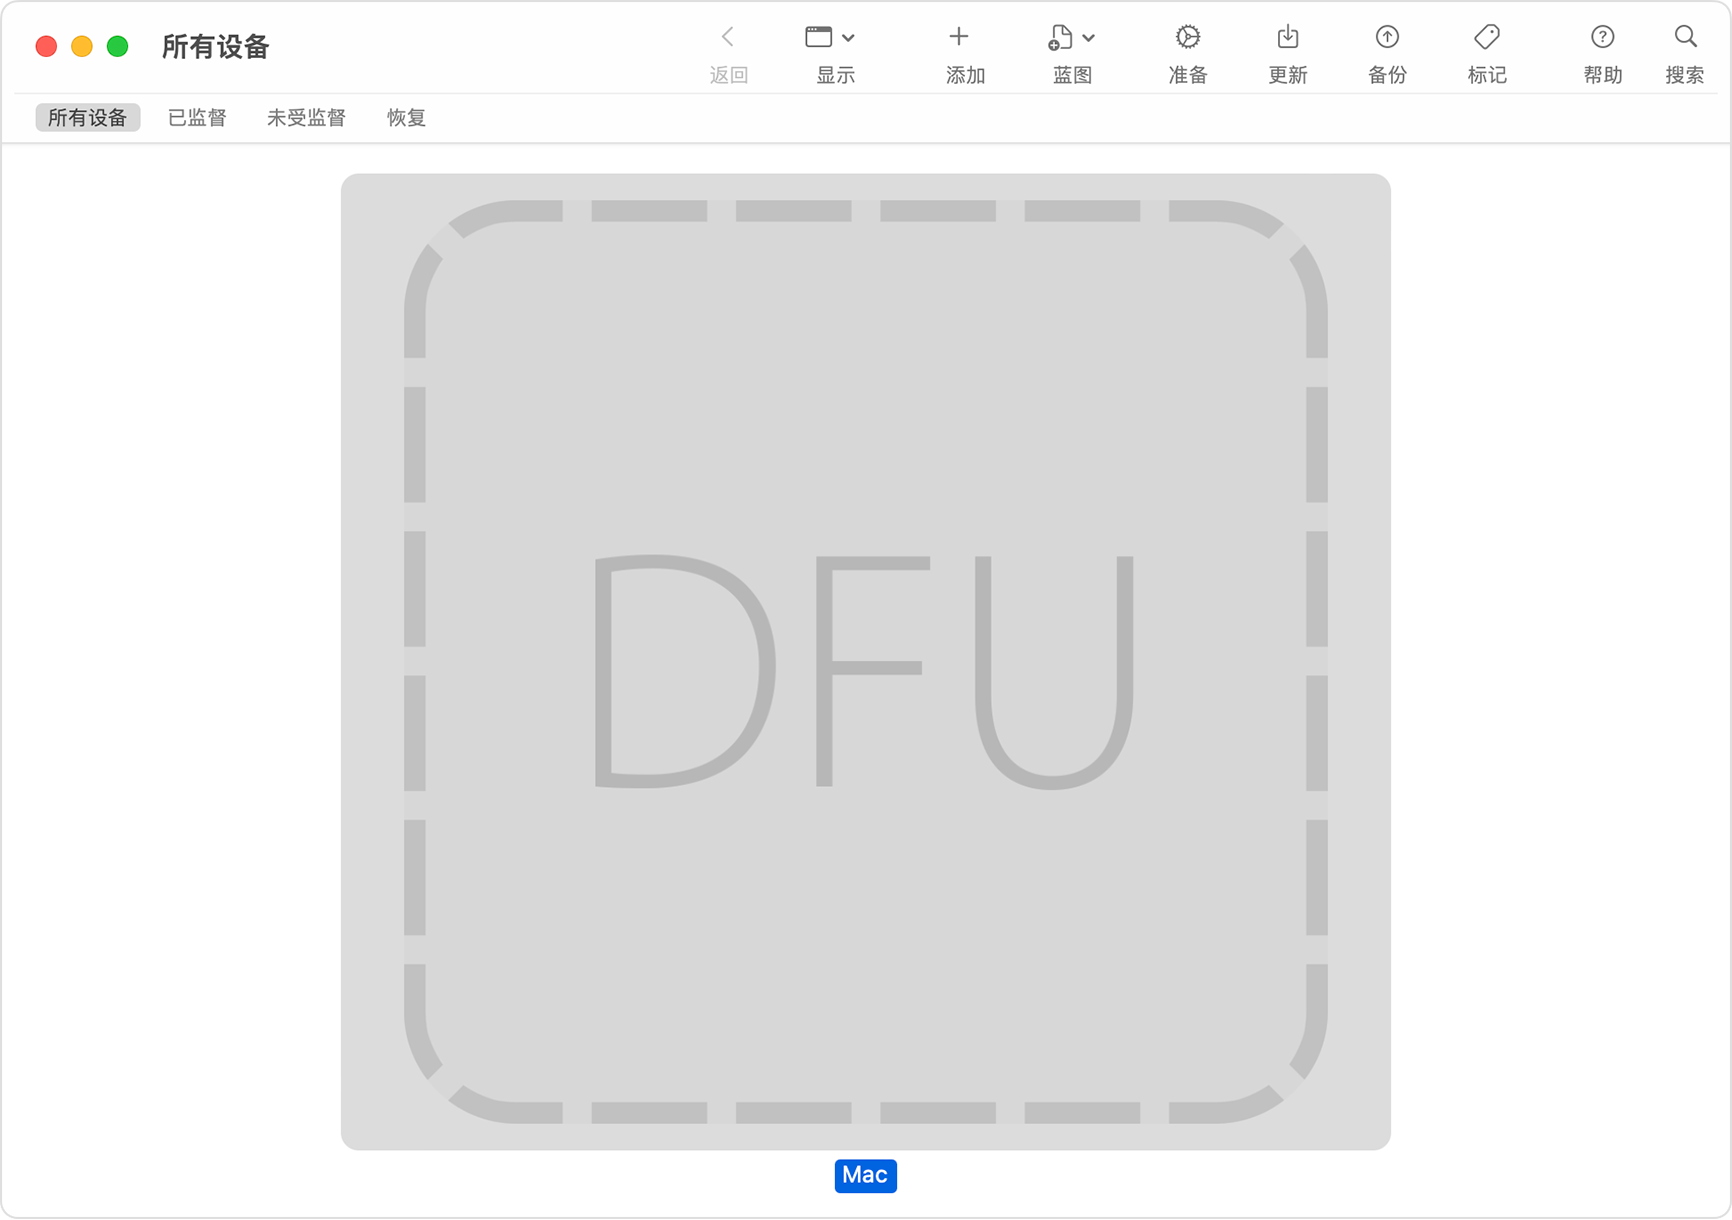 Apple Configurator 窗口中显示了已为受影响的 Mac 选择“DFU”